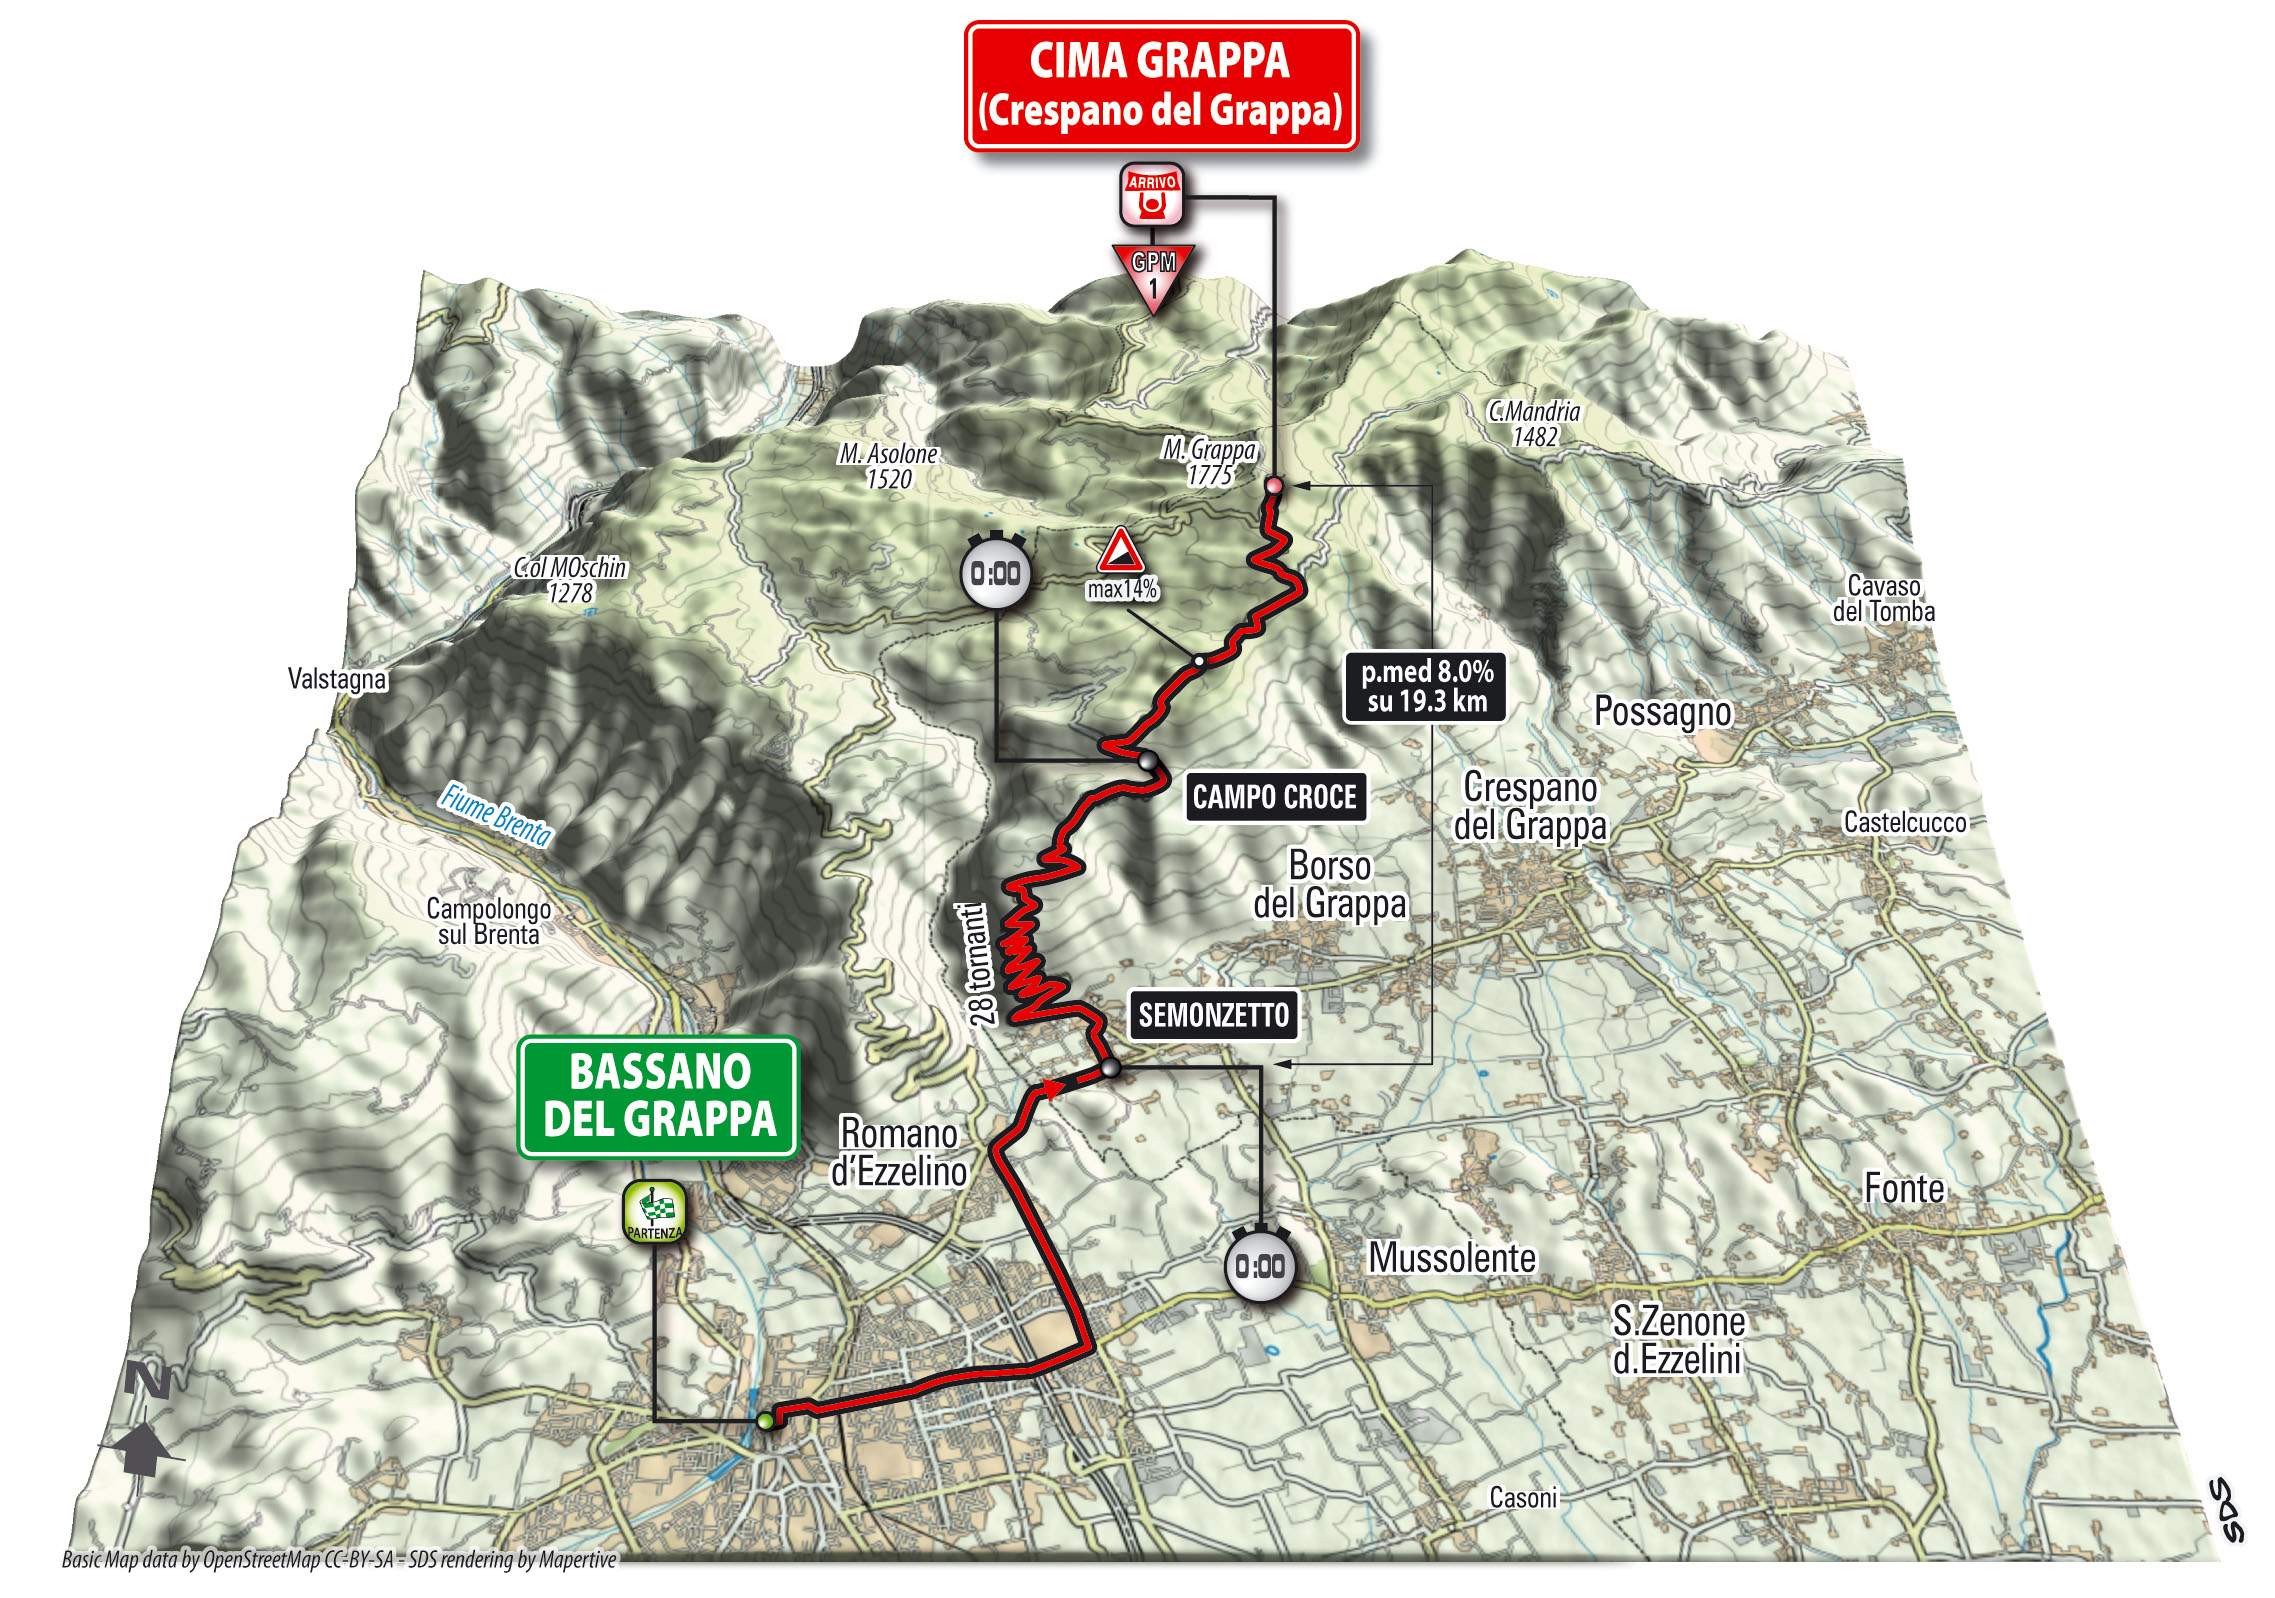 Giro d'Italia 2014 stage 19 climb details (Cima Grappa)